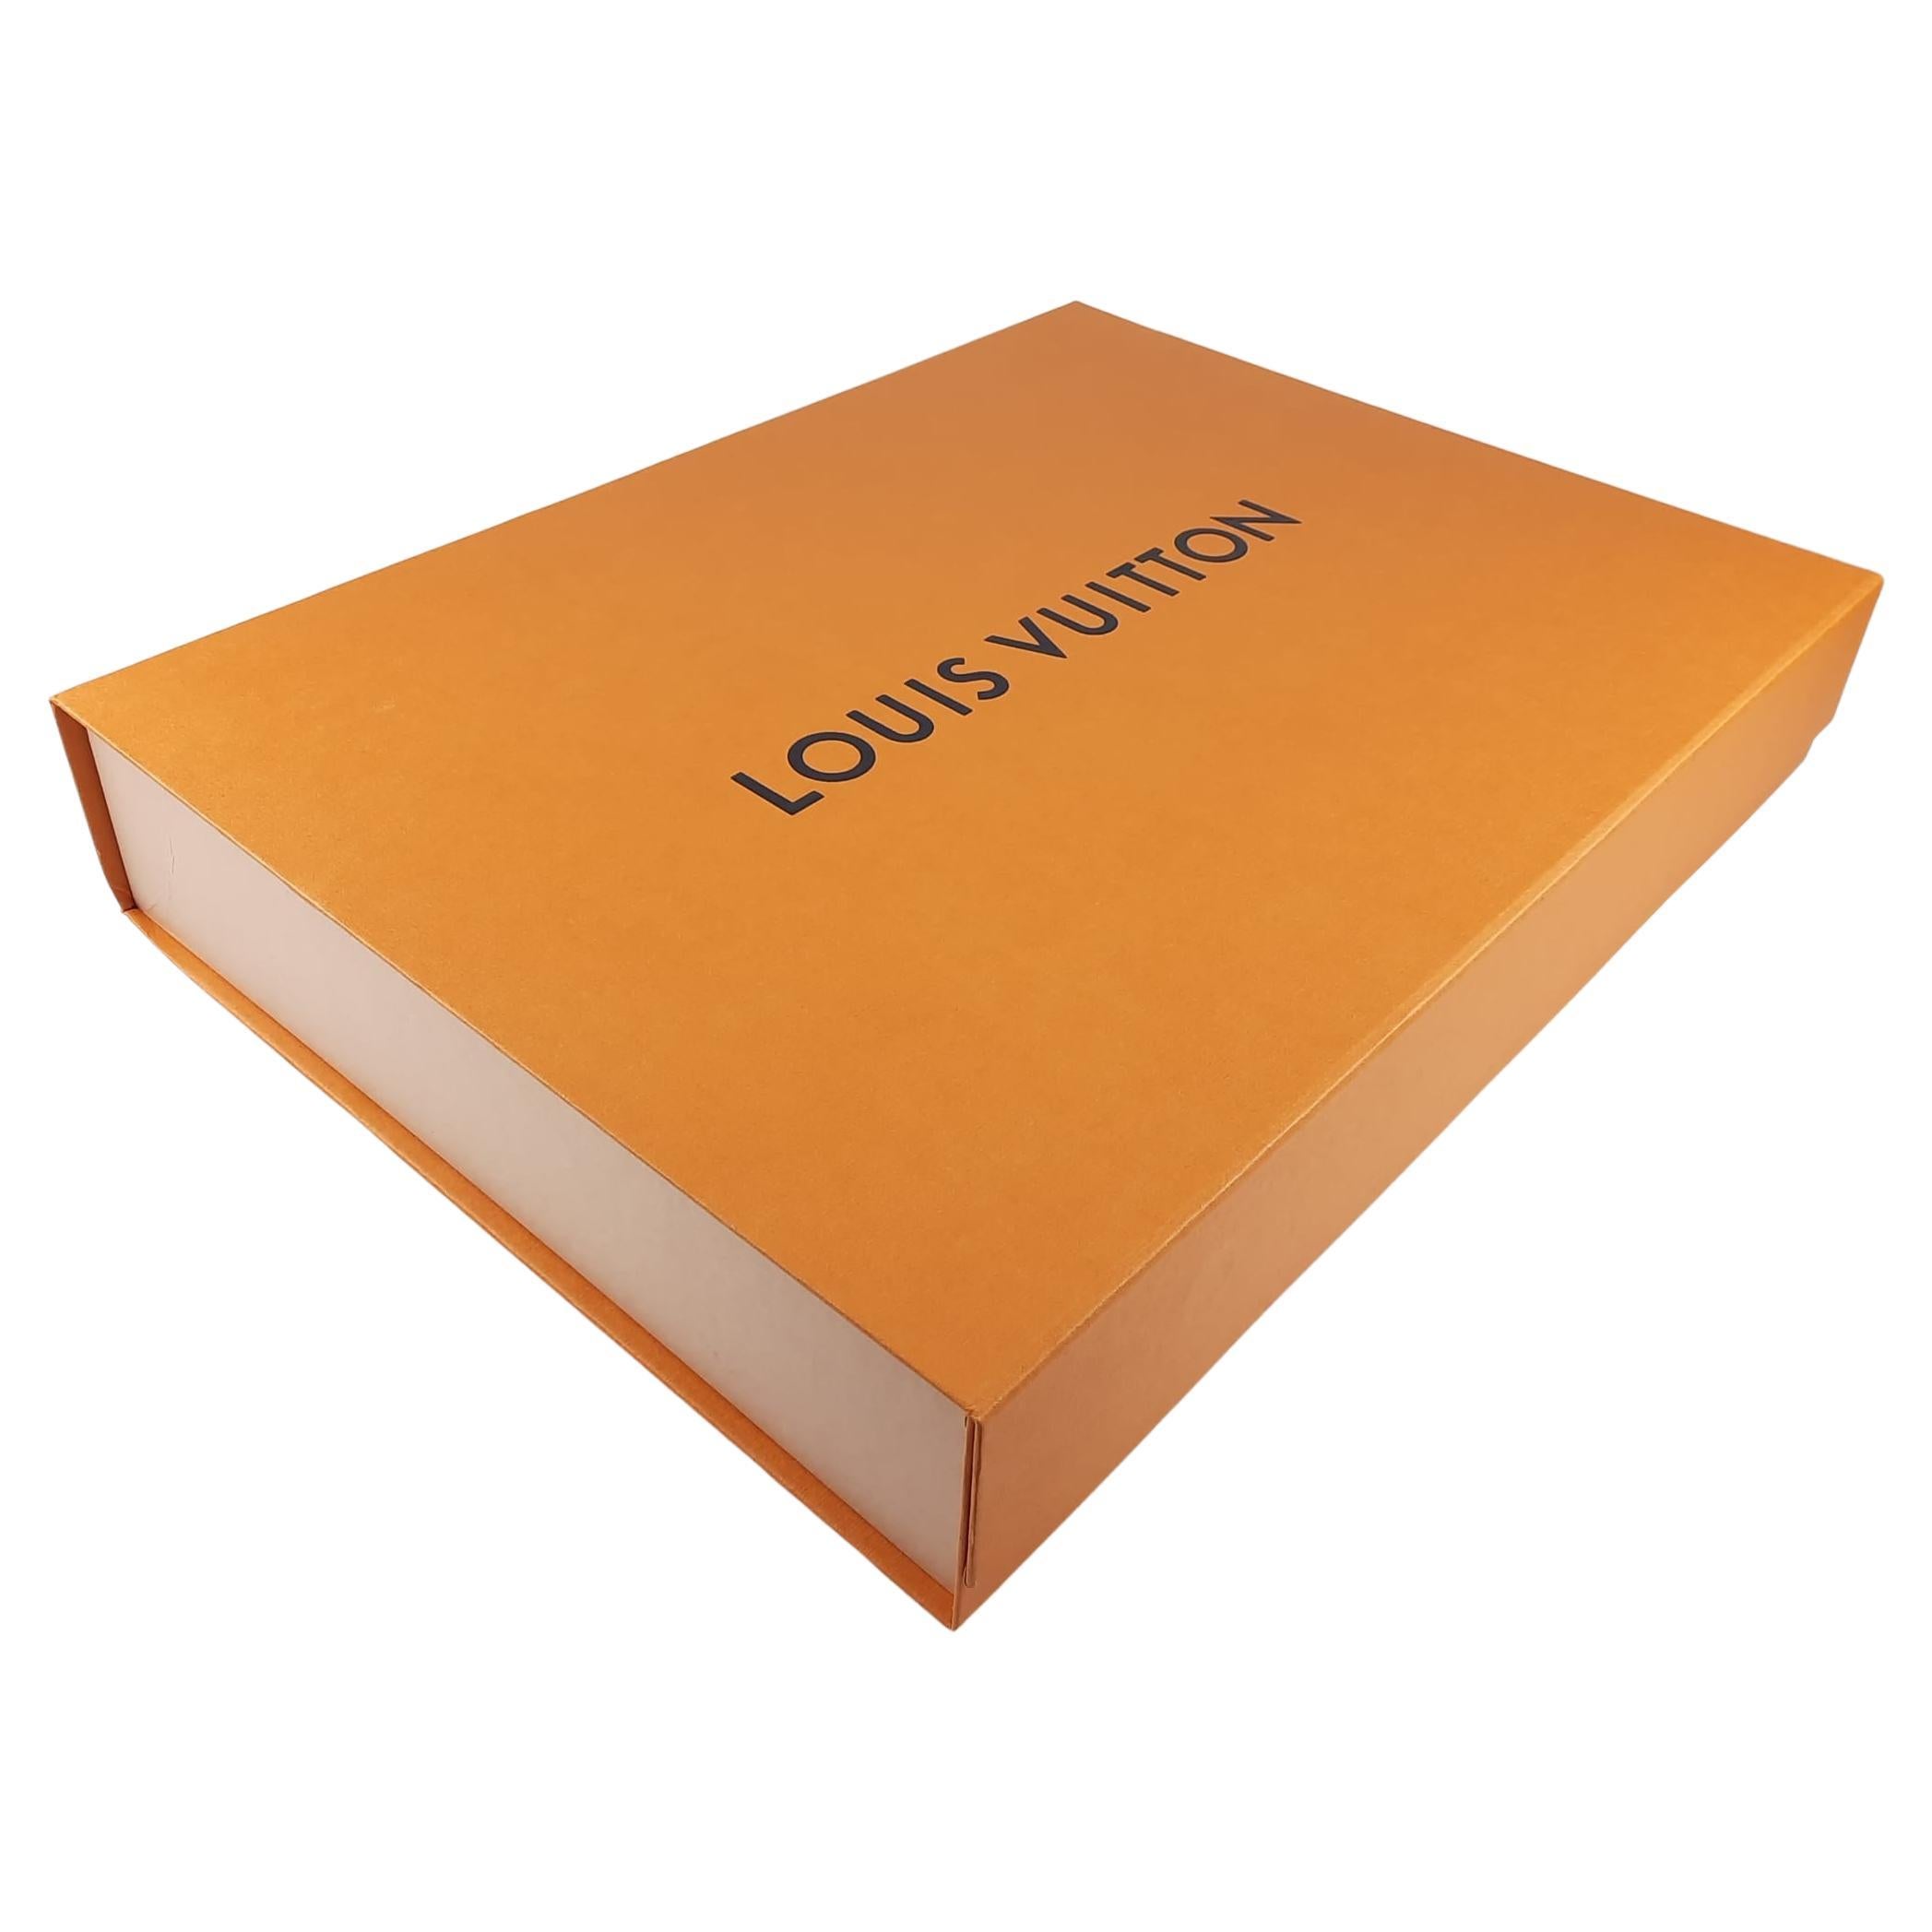 Louis Vuitton Gift Box 